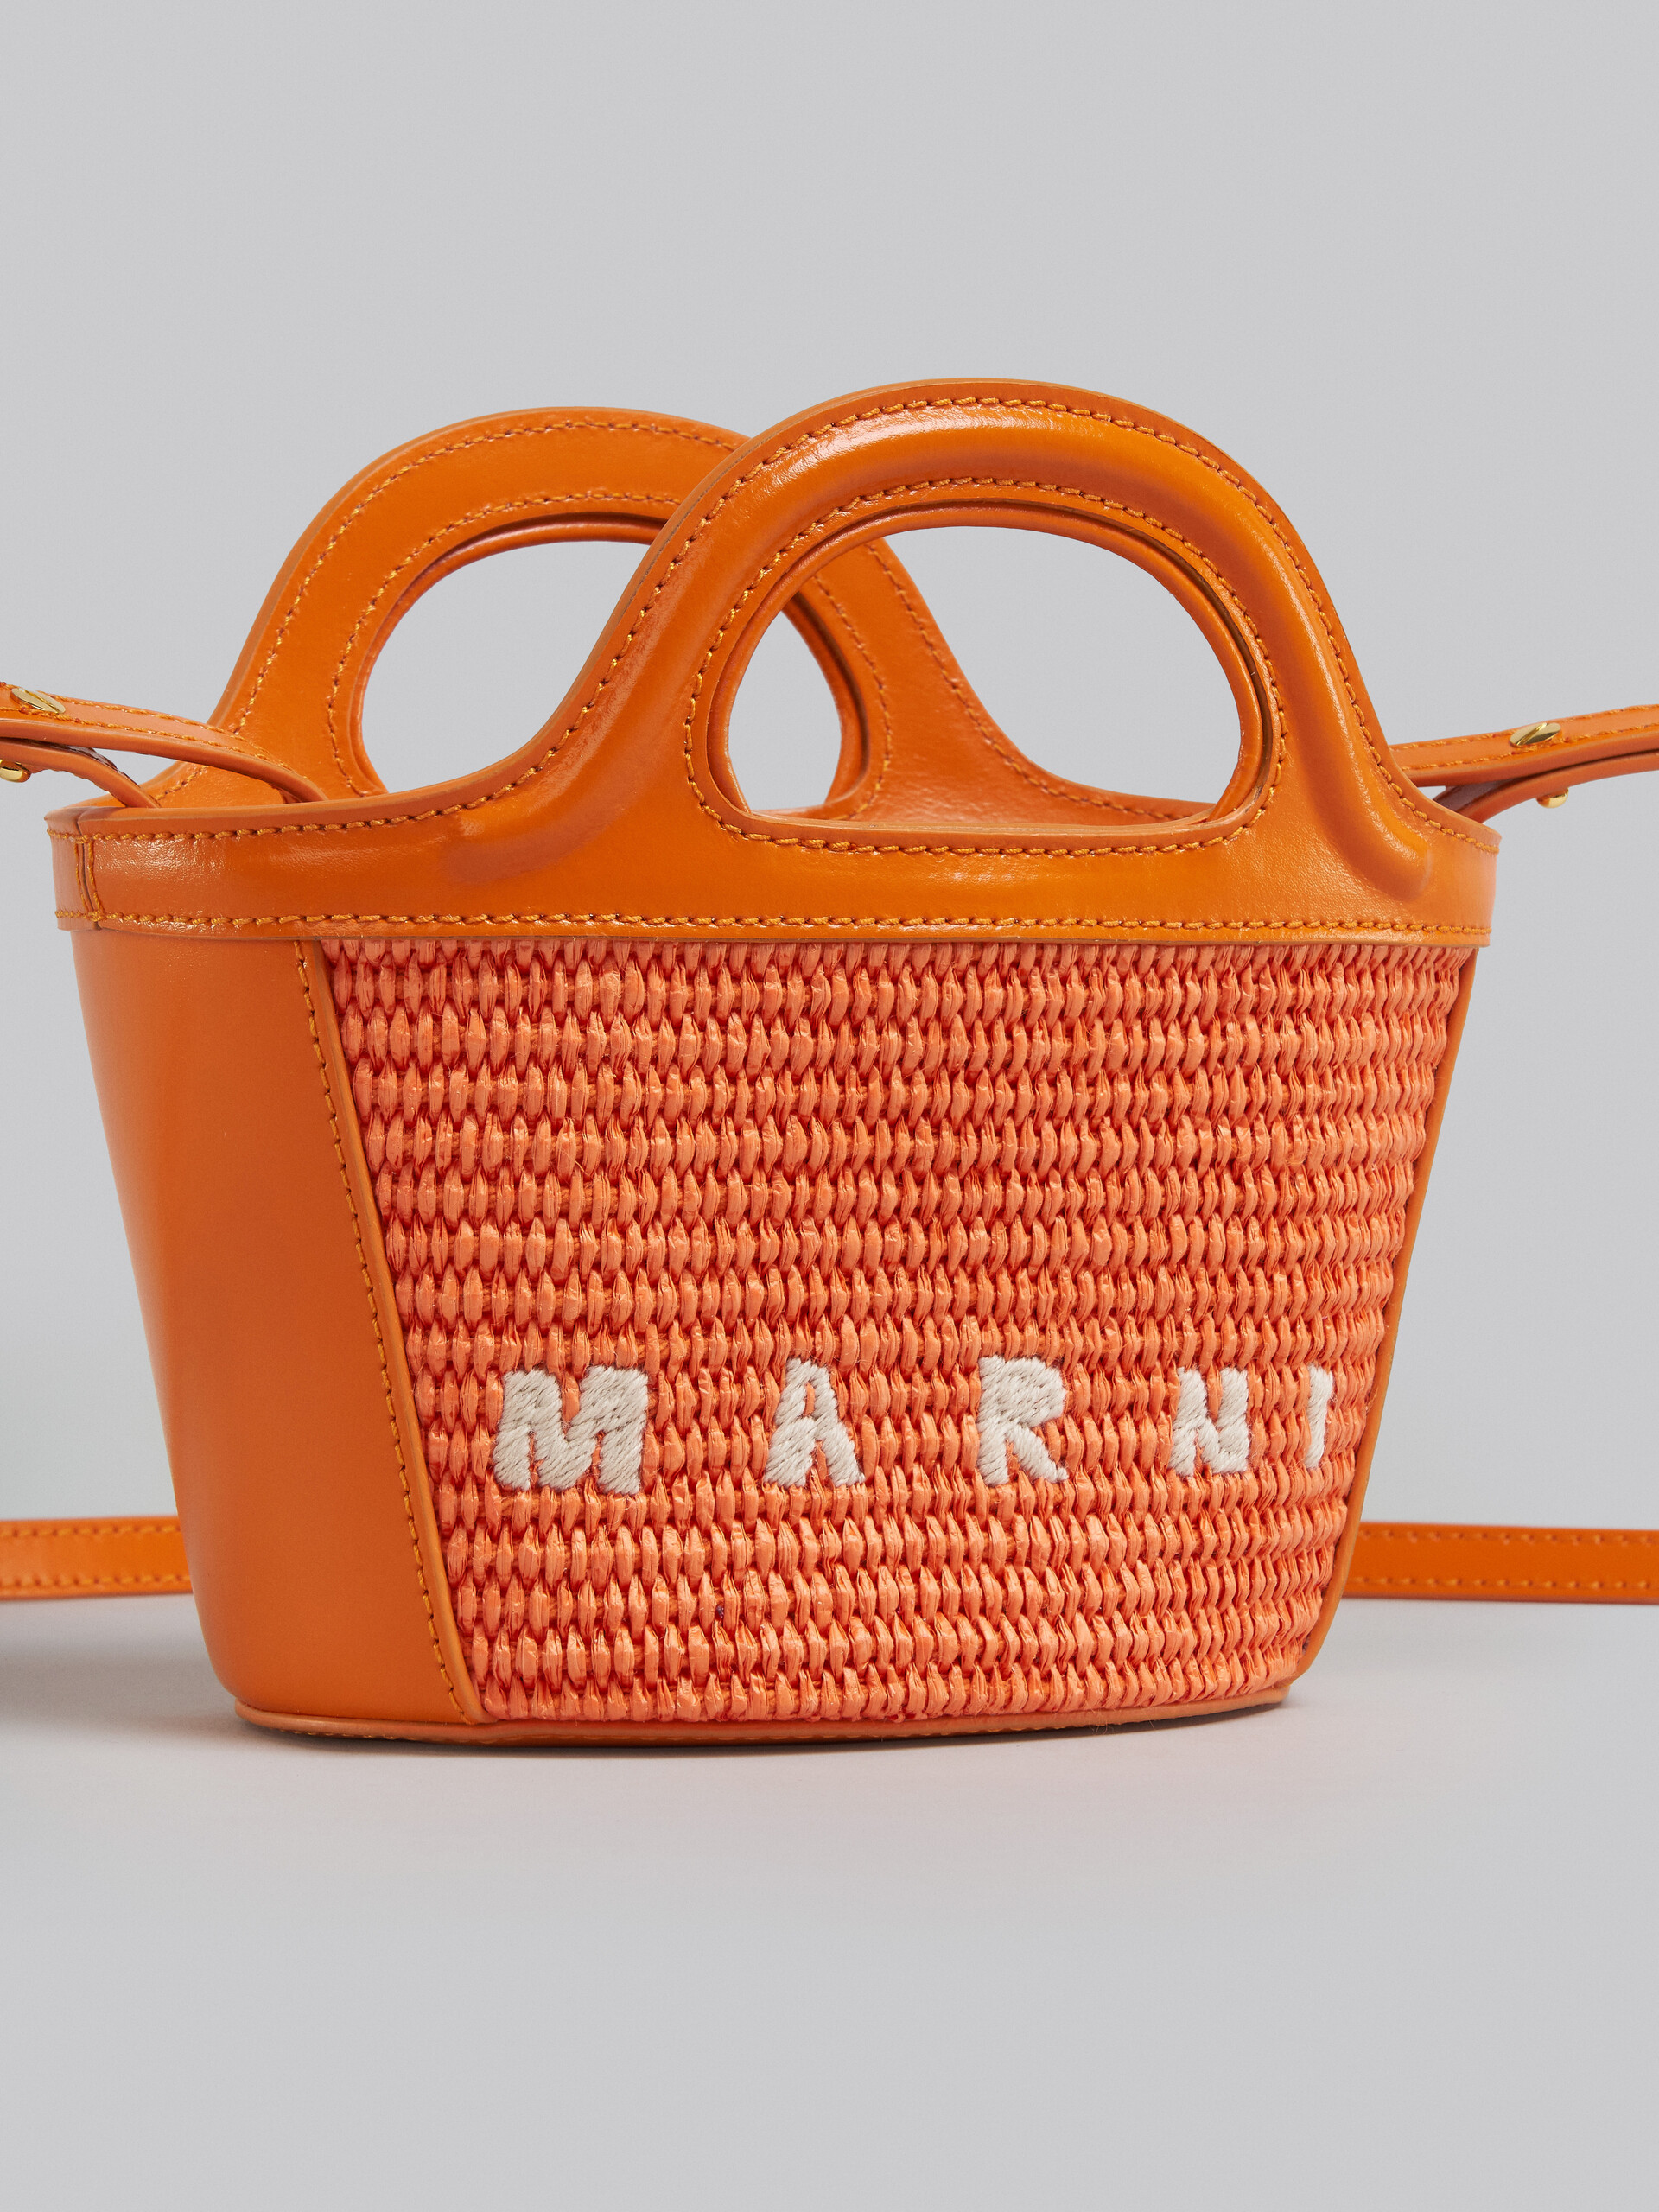 Tropicalia Micro Bag in orange leather and raffia - Handbag - Image 5